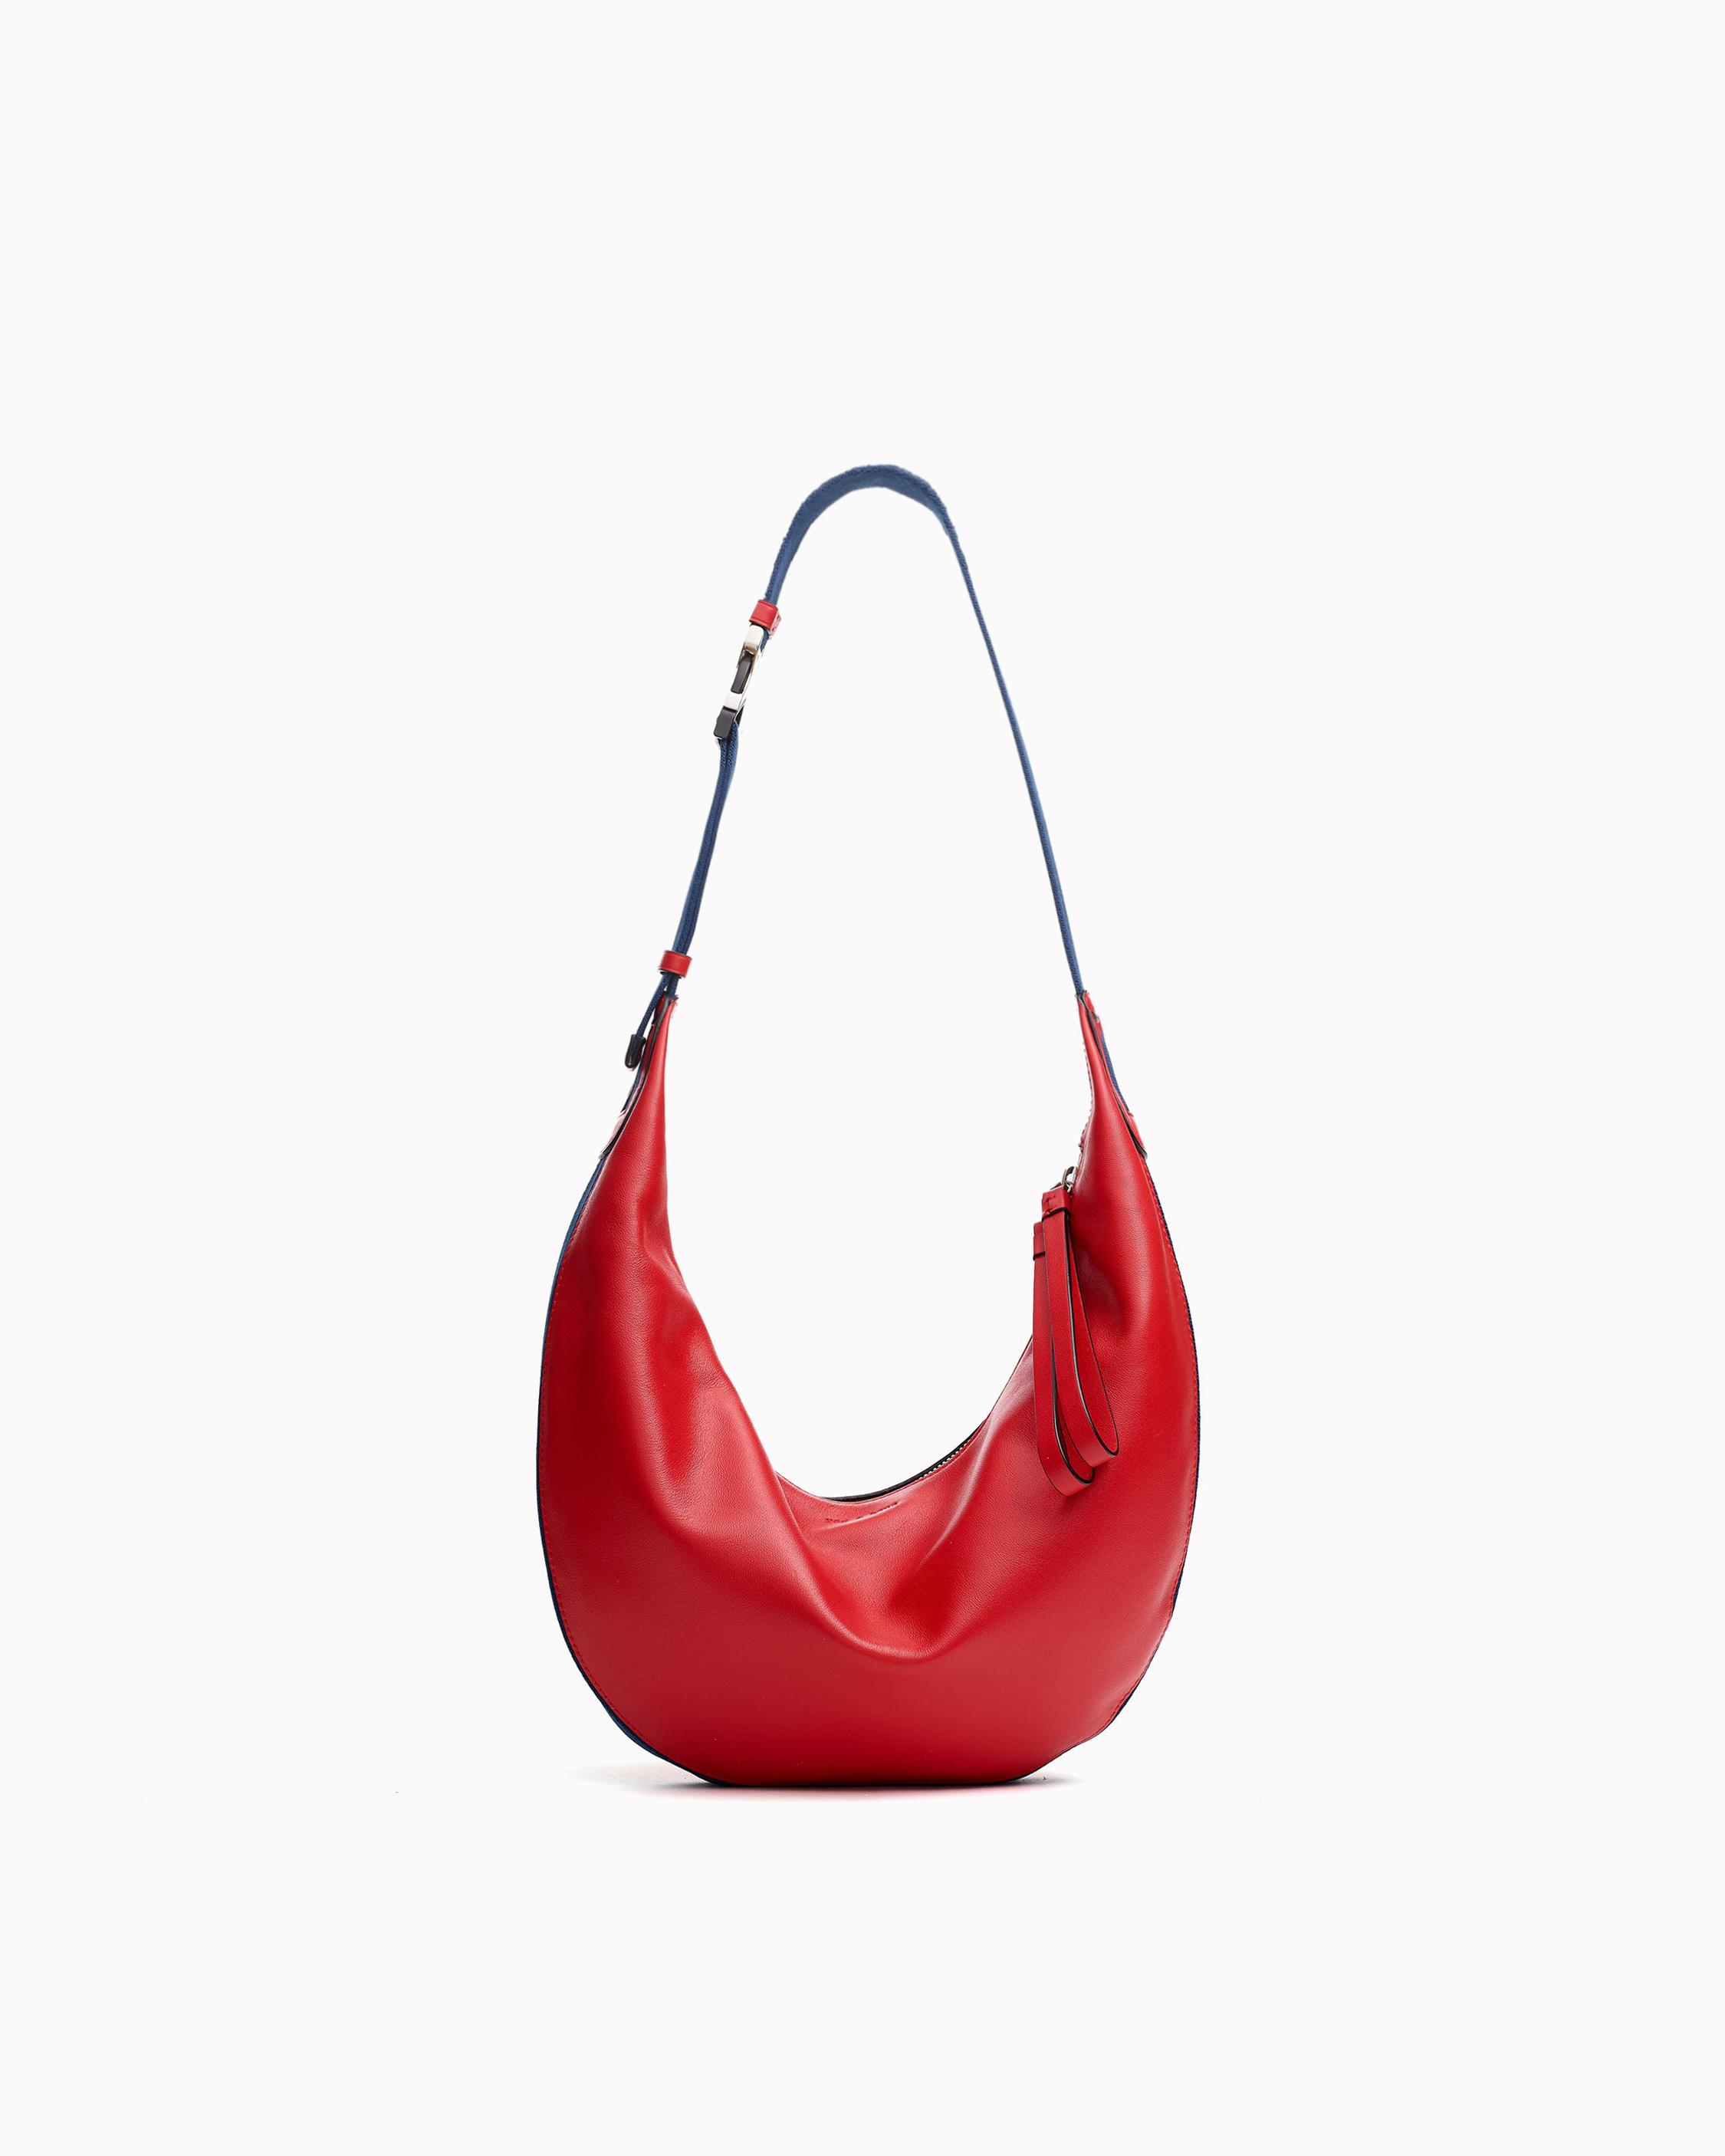 Red Women's Crossbody Bags